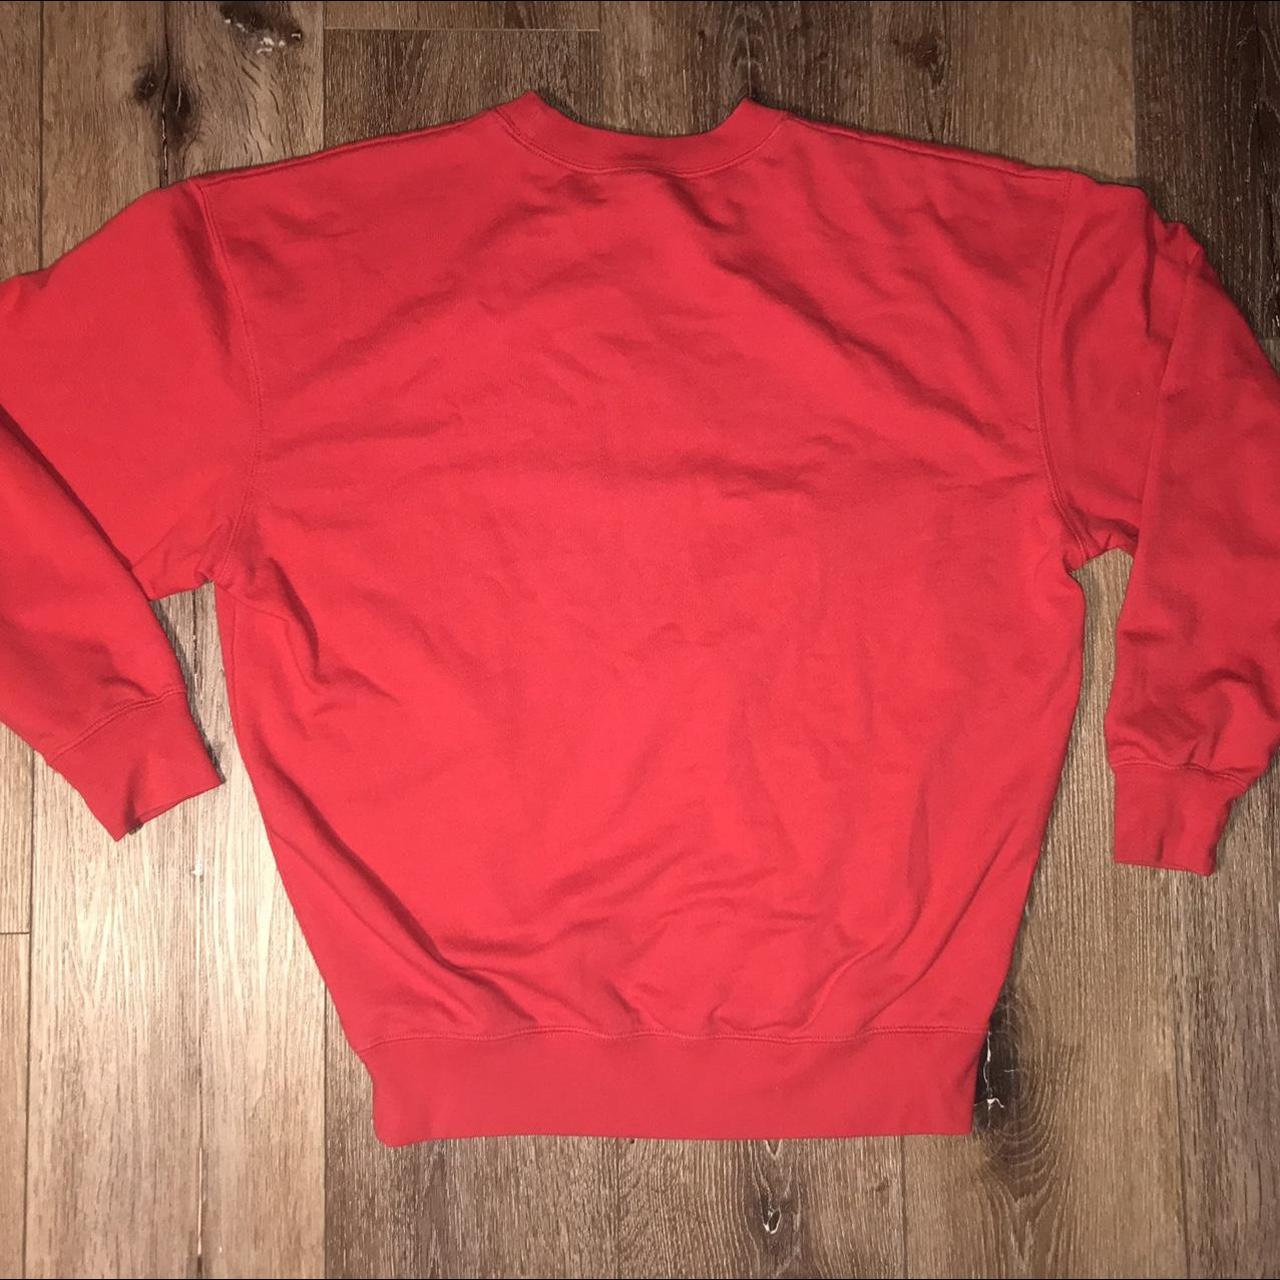 Top Stitch Men's Red and Blue Sweatshirt (3)